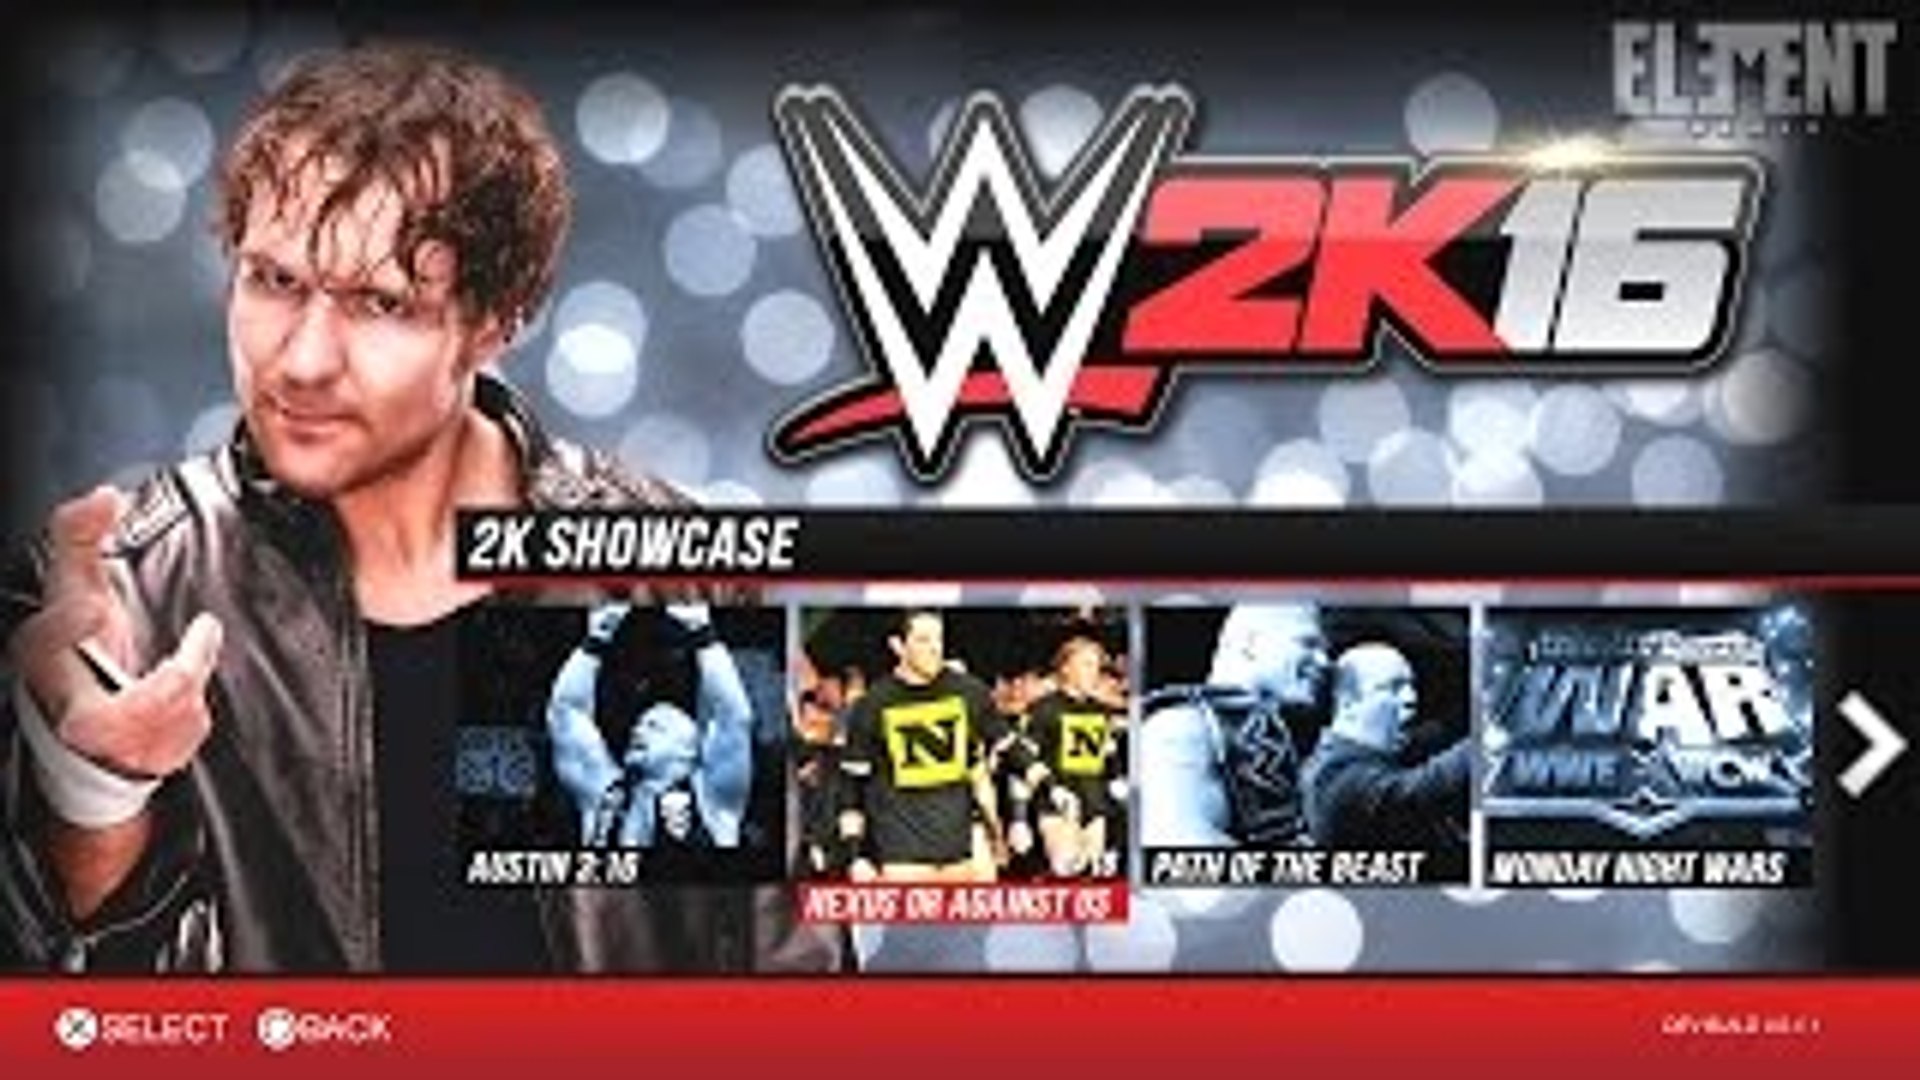 WWE 2K16 2K Showcase - Nexus or Against us / Path of the Beast (WWE 2K16 PS4/XB1  Notion) - Dailymotion Video